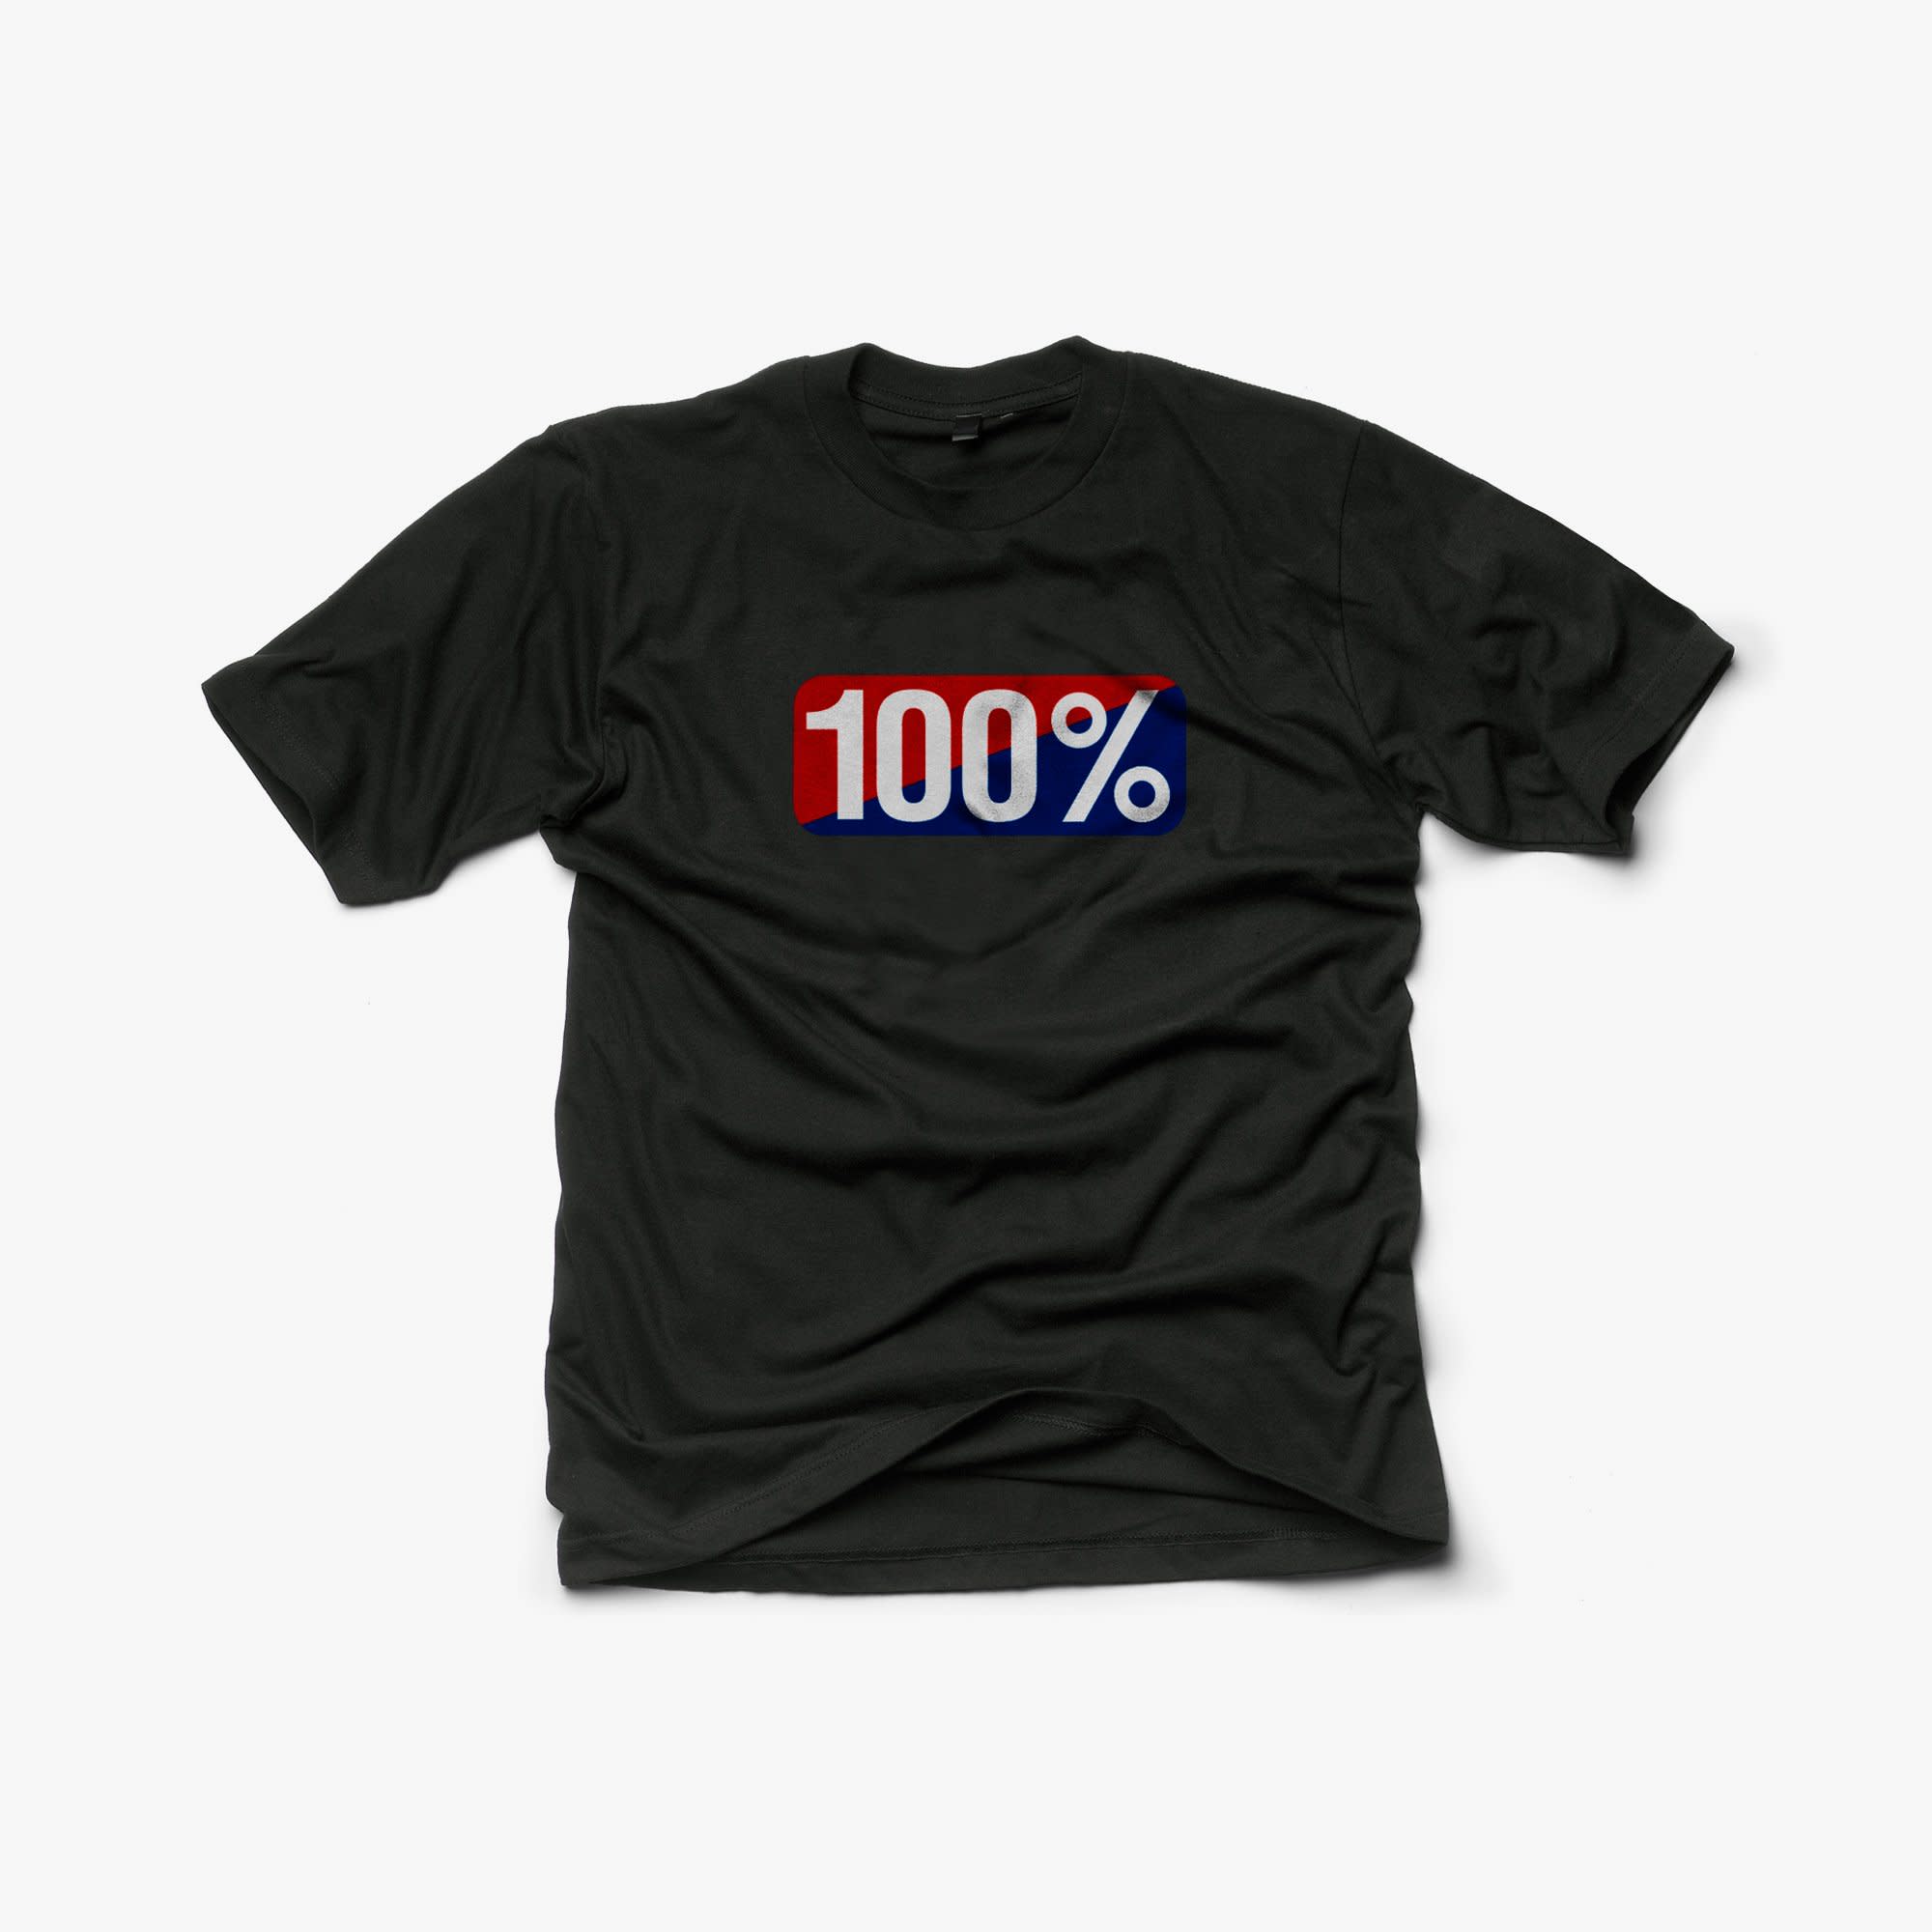 100 percent t-shirt shirts for men classic tshirt